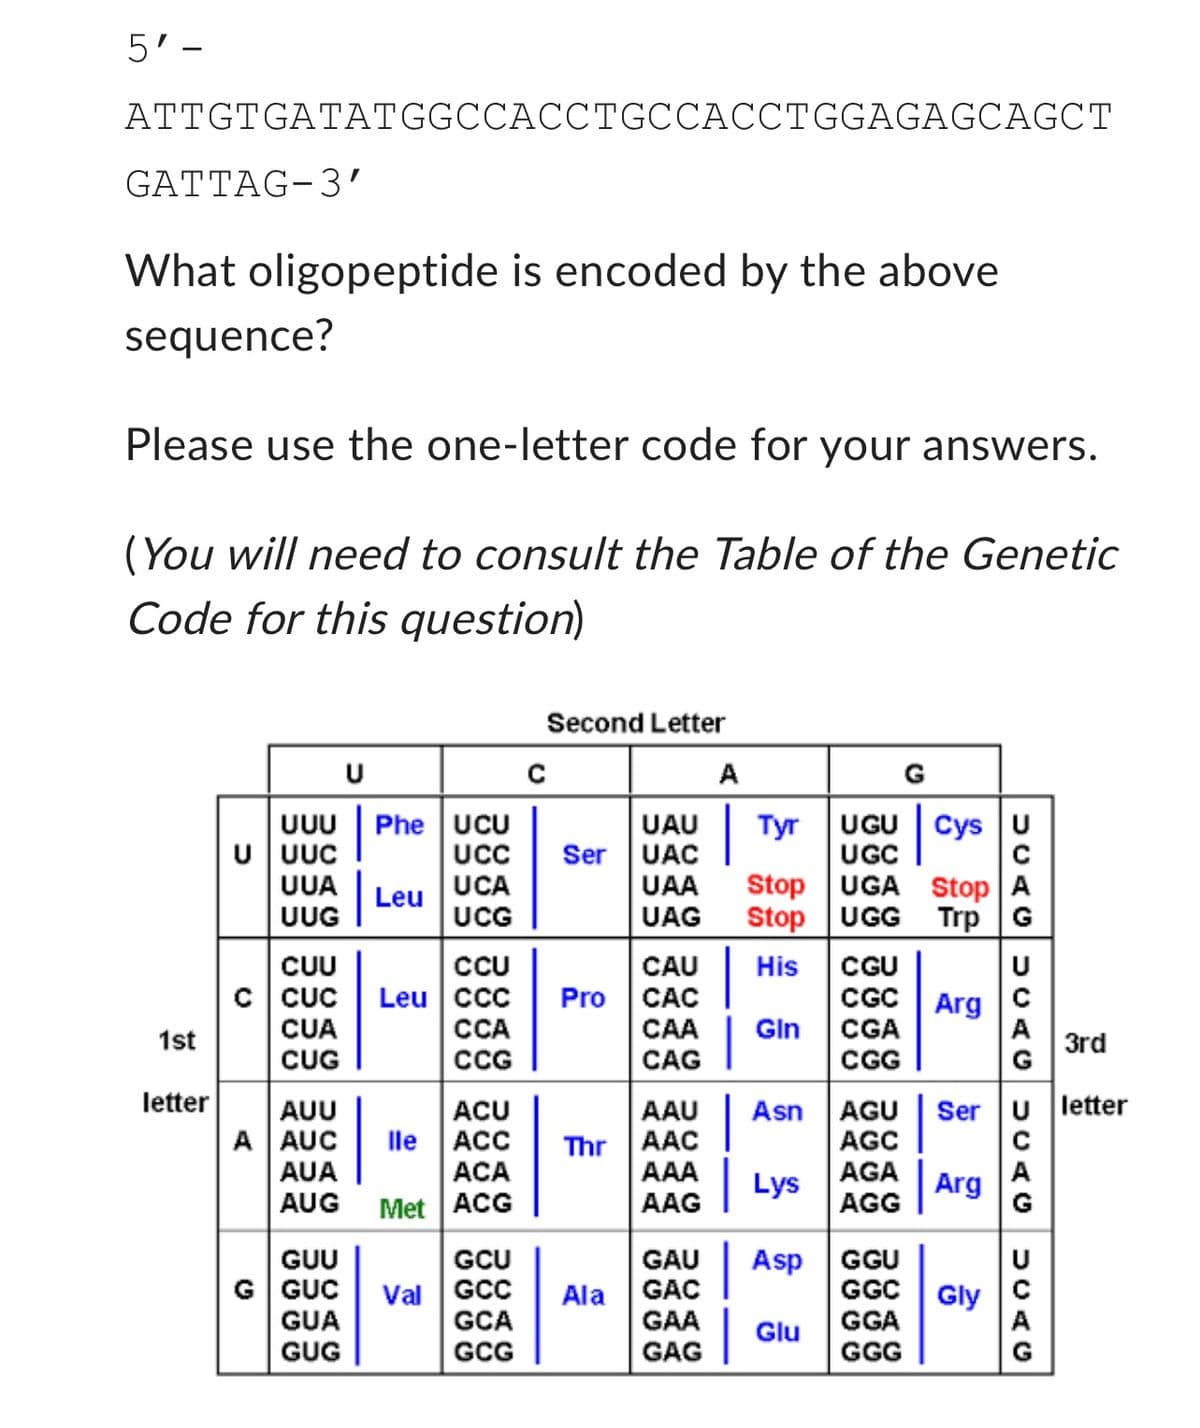 5'-
ATTGTGATATGGCCACCTGCCACCTGGAGAGCAGCT
GATTAG-3'
What oligopeptide is encoded by the above
sequence?
Please use the one-letter code for your answers.
(You will need to consult the Table of the Genetic
Code for this question)
1st
letter
UUU Phe UCU
UCC
Leu UCA
UCG
U UUC
UUA
UUG
CUU
C CUC
CUA
CUG
AUU
A AUC
AUA
AUG
U
GUU
G GUC
GUA
GUG
CCU
Leu CCC
CCA
CCG
ACU
lle ACC
ACA
Met ACG
GCU
Val GCC
GCA
GCG
с
Second Letter
Ser
Pro
Thr
Ala
UAU
UAC
A
|
AAU
AAC
AAA
AAG
GAU
GAC
GAA
GAG
Tyr
CAU
CAC
CAA Gin
CAG
1
UAA Stop UGA Stop A
UAG Stop
UGG Trp G
His
Lys
UGU
UGC
Asp
Glu
G
3rd
Asn AGU Ser U letter
AGC
AGA
AGG
Cys U
CGU
CGC Arg
CGA
CGG
GGU
GGC
GGA
GGG
DCAG DUAG DUCAG
Arg
Gly
UCAG